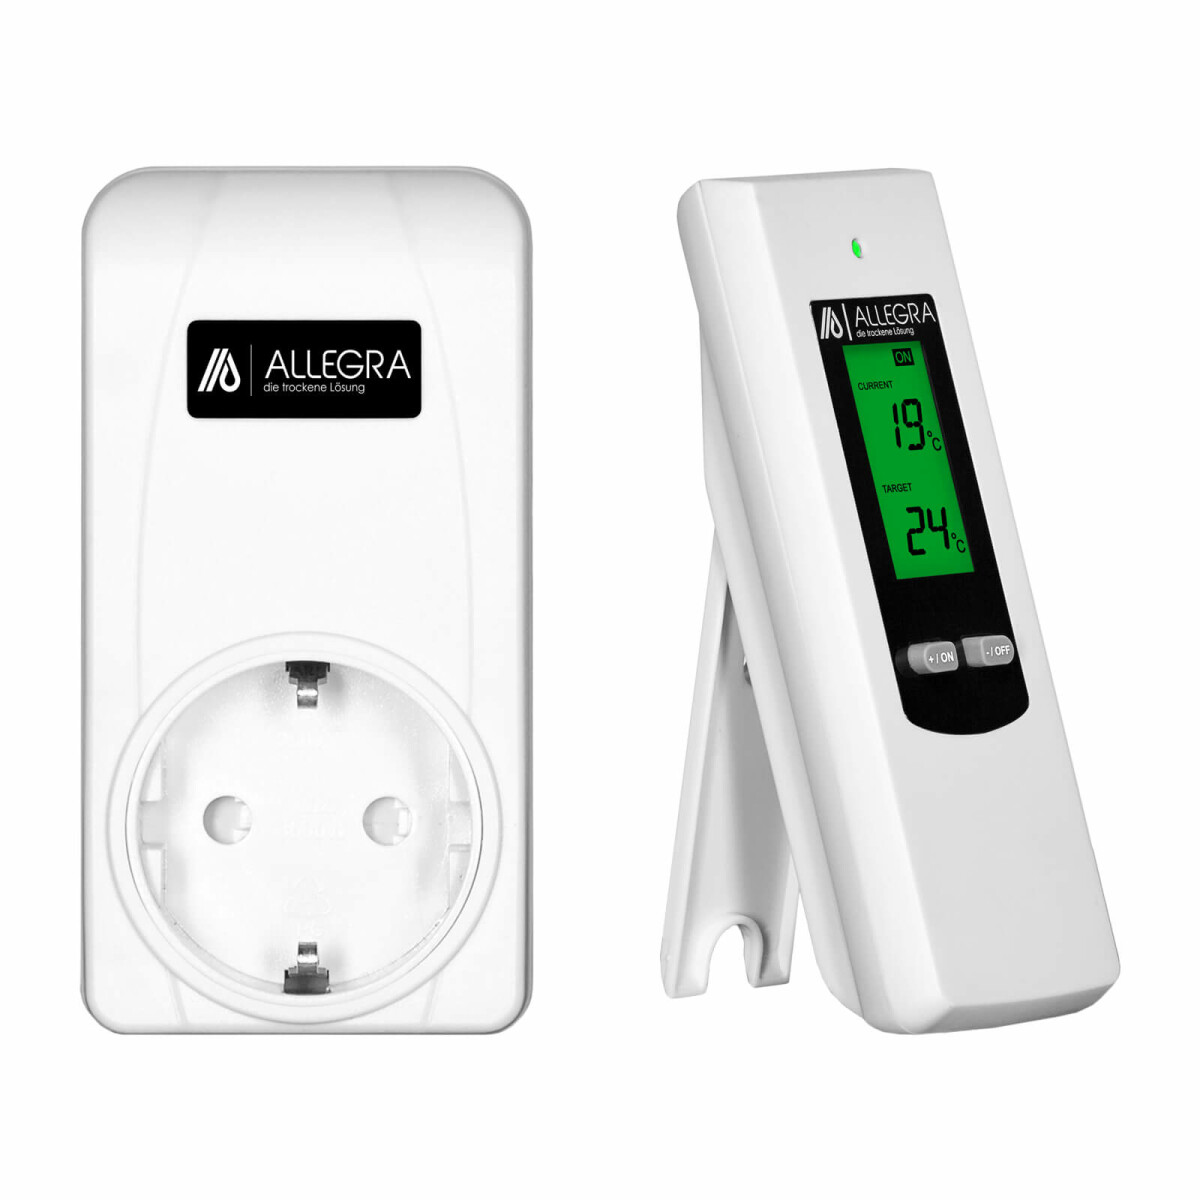 be cool Thermostat-Sender »Steckdosen-Thermostat« kaufen bei OTTO